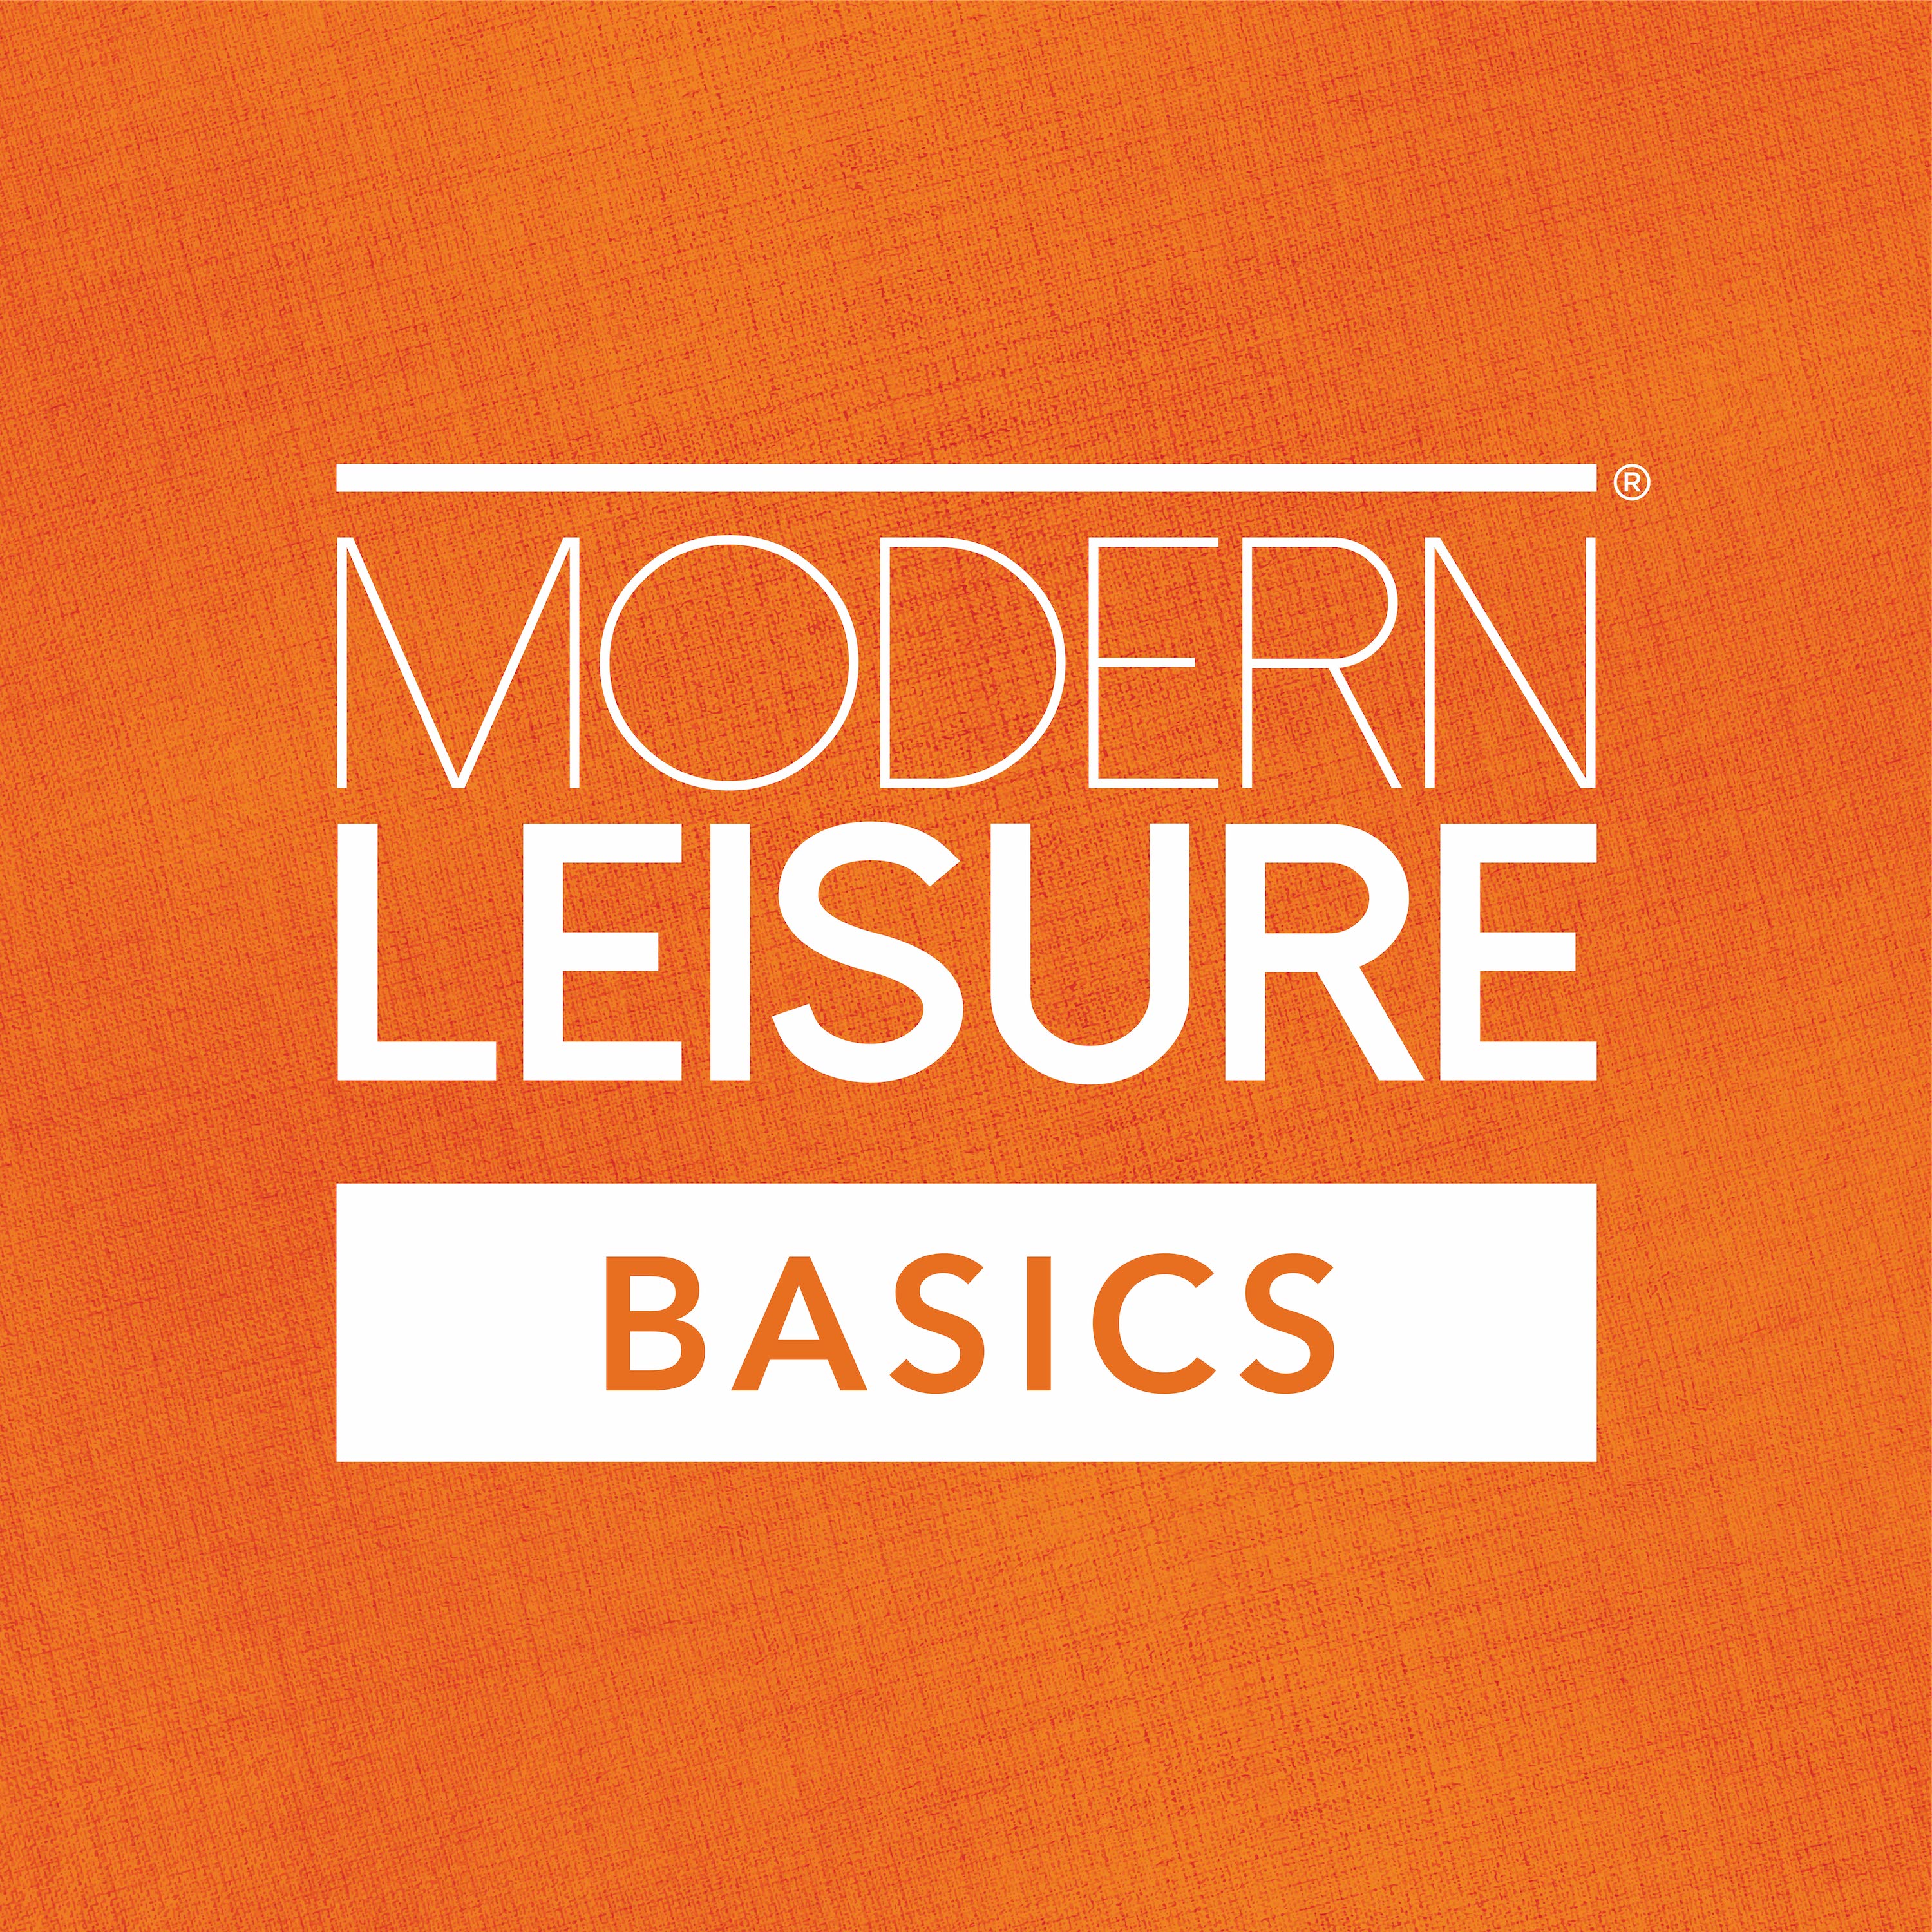 Modern Leisure Basics Rectangle Patio Swing Cover, 87"L x 64"W x 66"H, Khaki - image 3 of 11